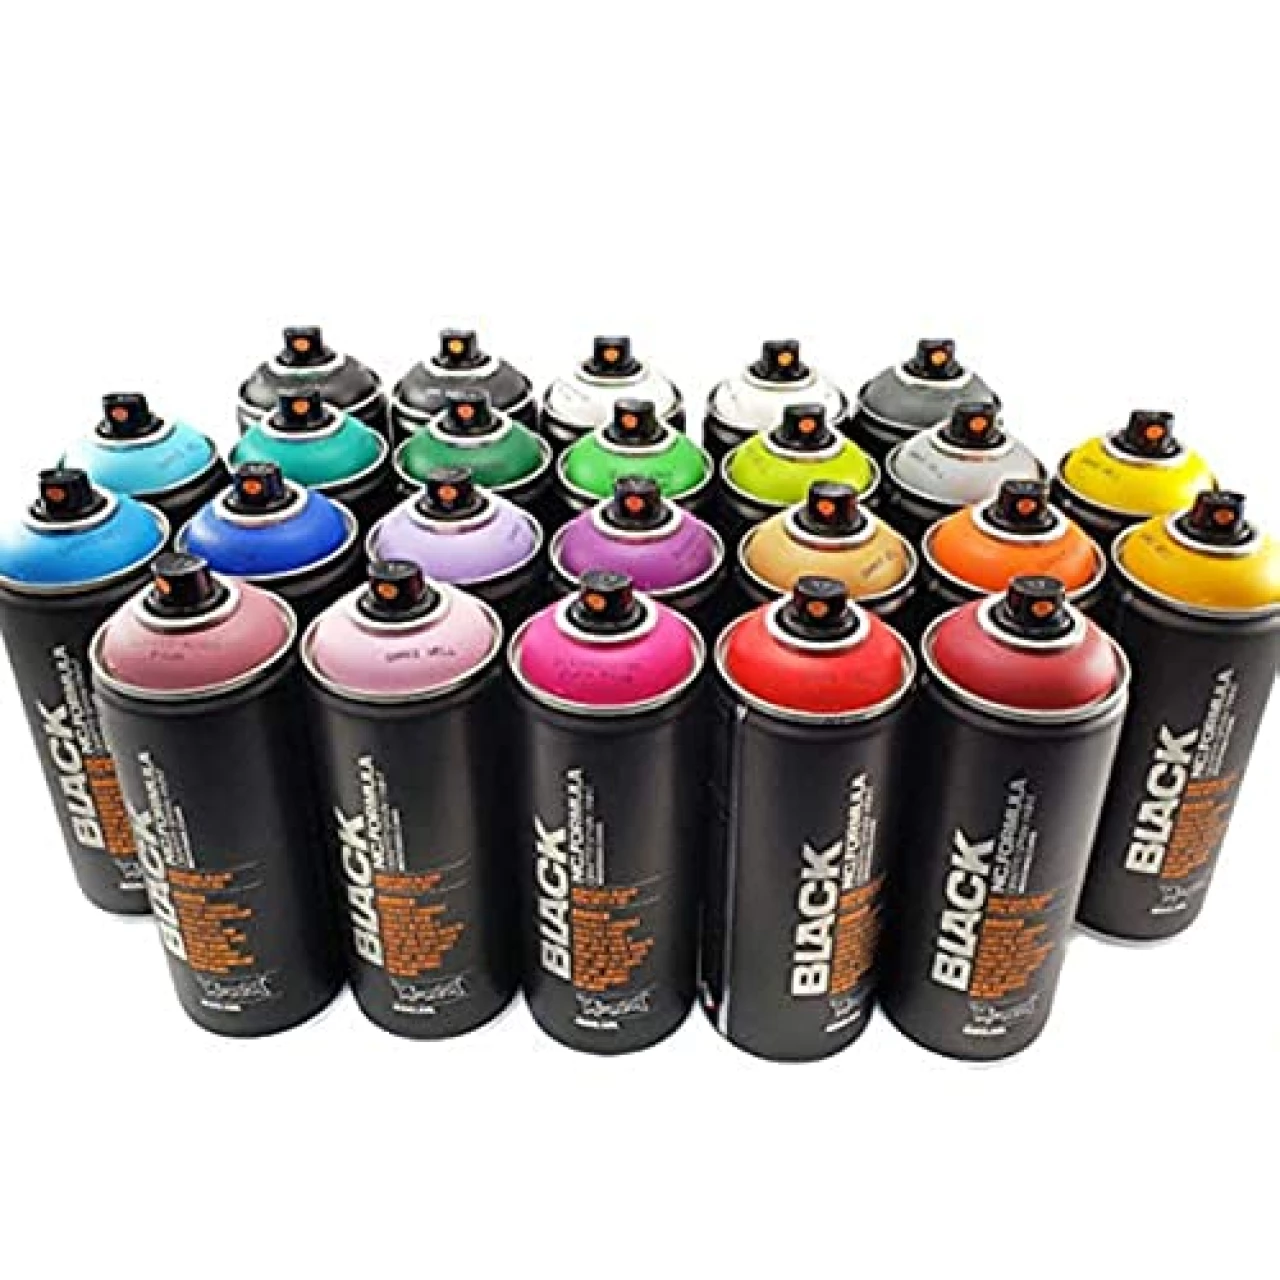 Montana Black 400ml Complete Artist Set of 24 Aerosol Spray Paint kit